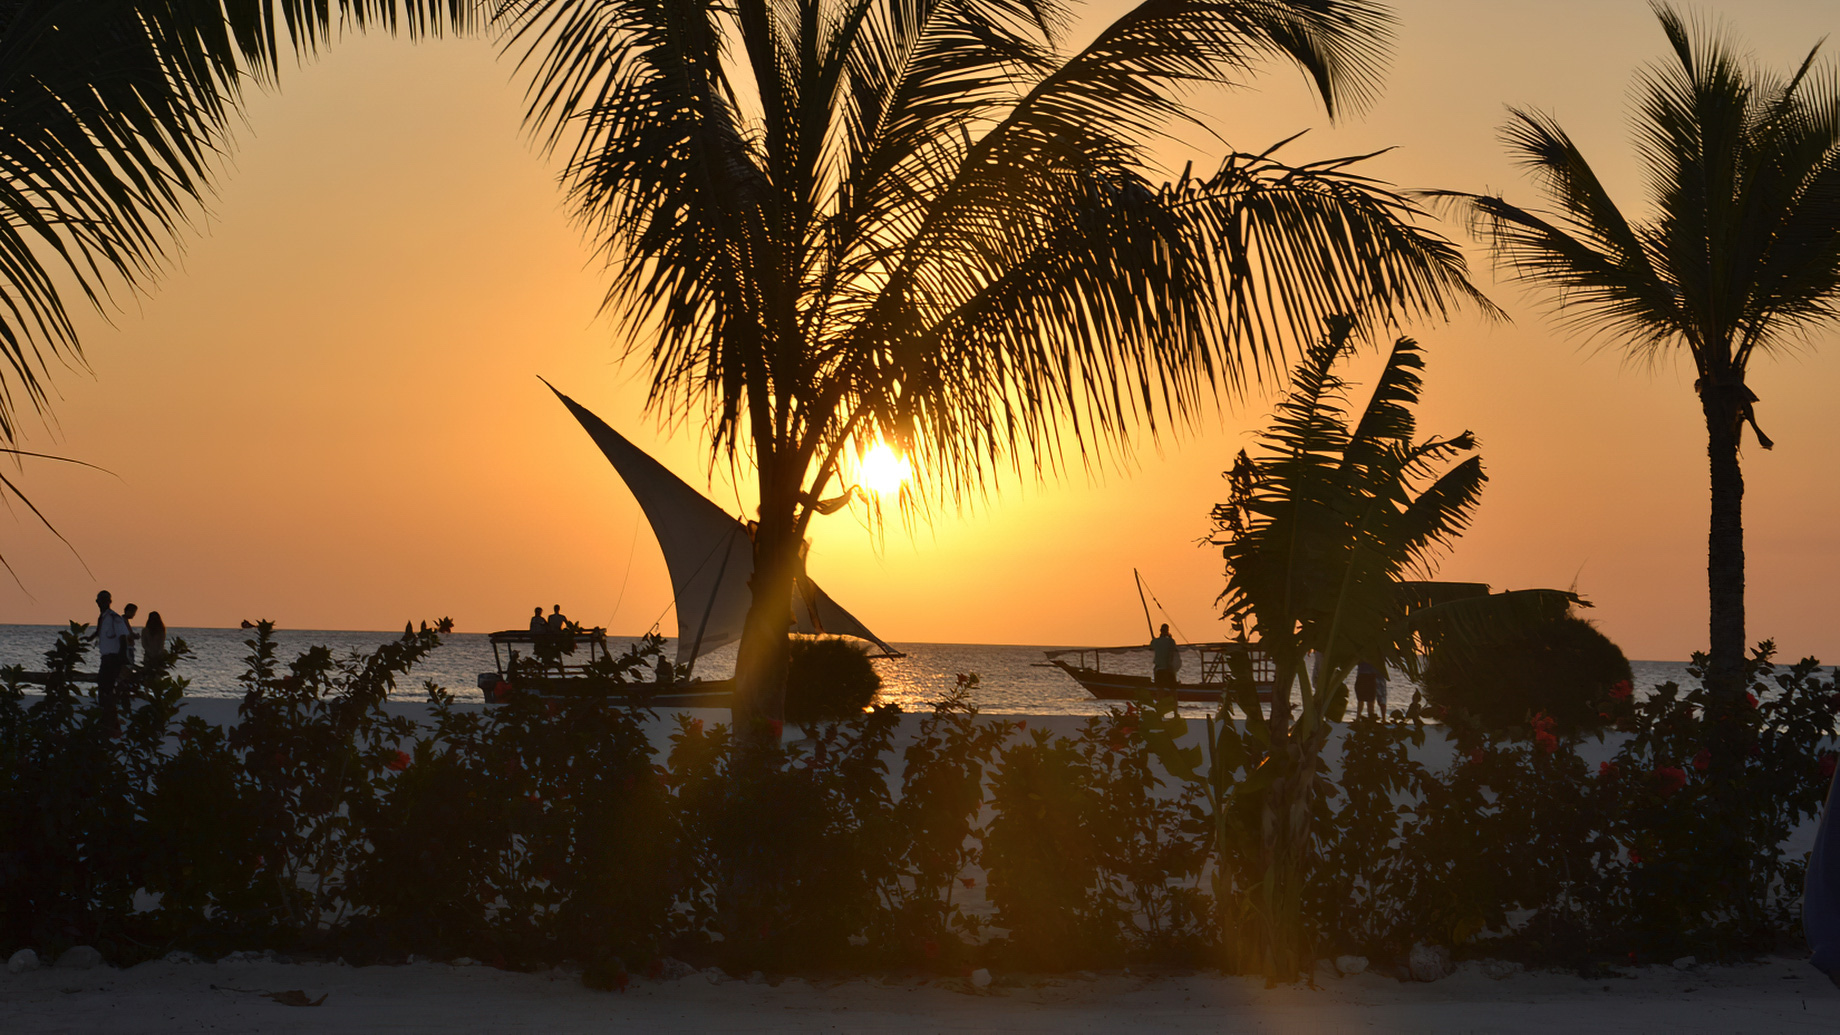 Gold Zanzibar Beach House & Spa Resort – Nungwi, Zanzibar, Tanzania – Ocean Sailboat Beach View Sunset